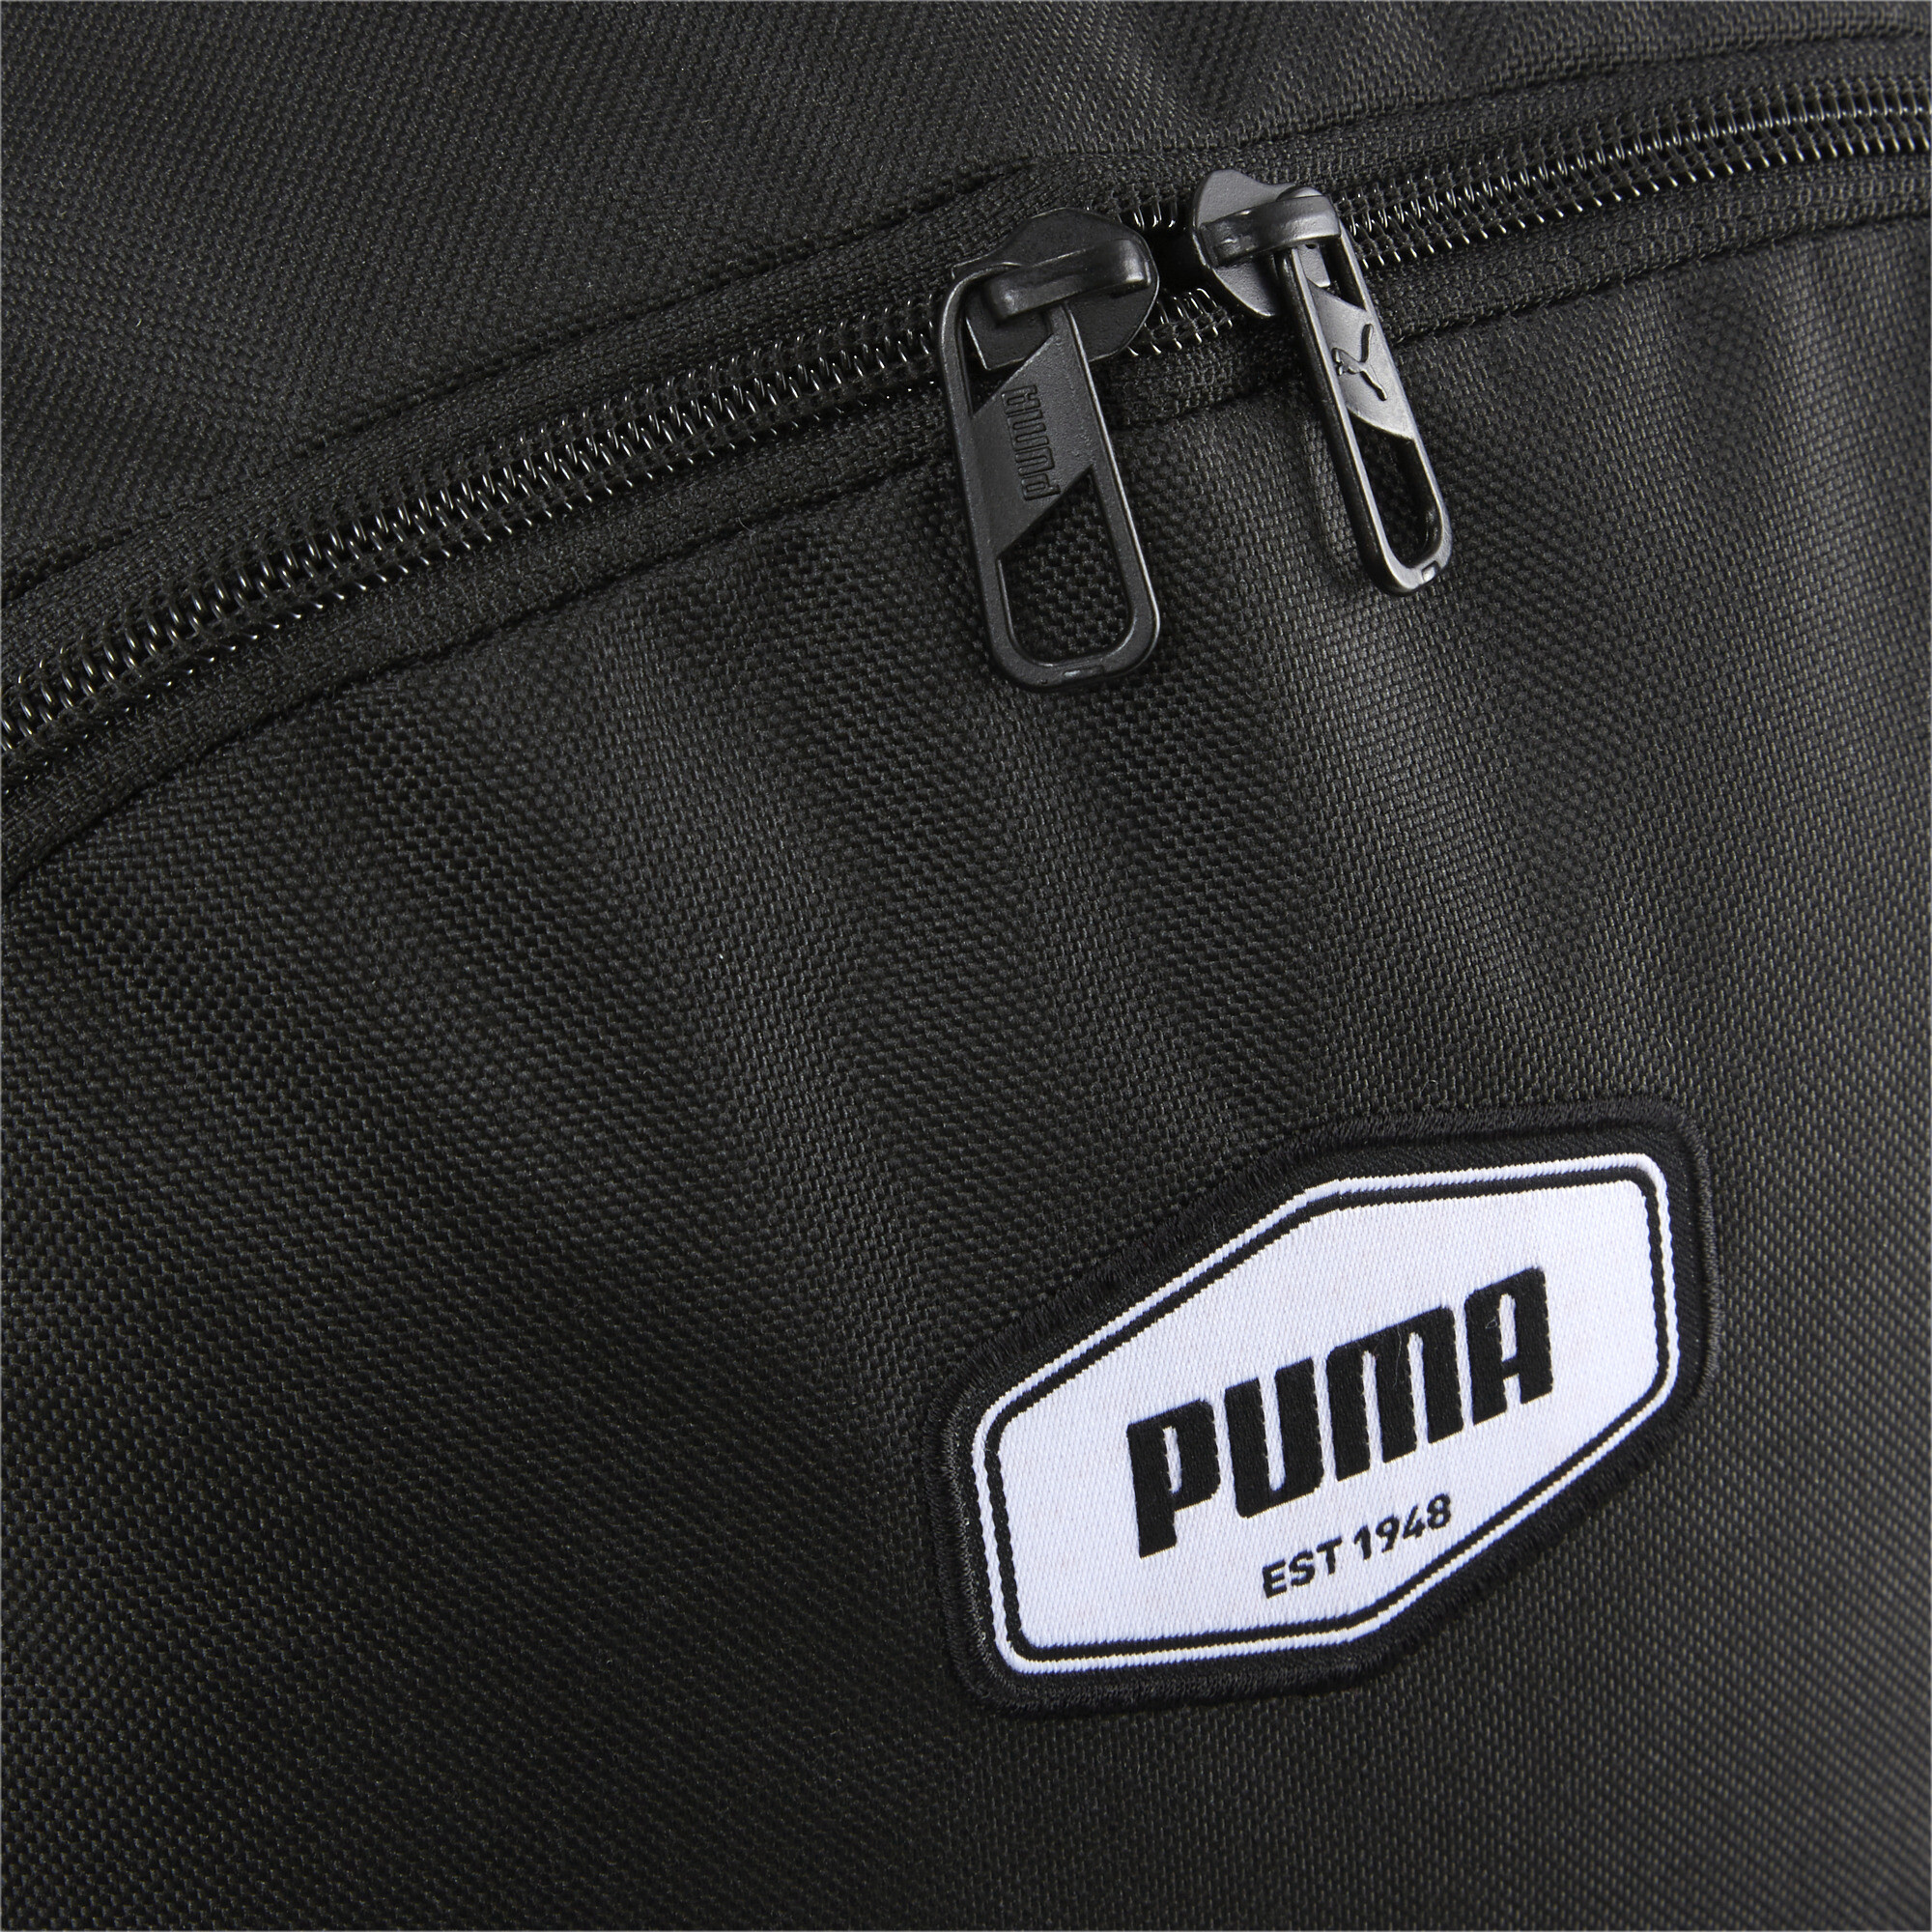 Puma Patch Backpack, Black, Accessories